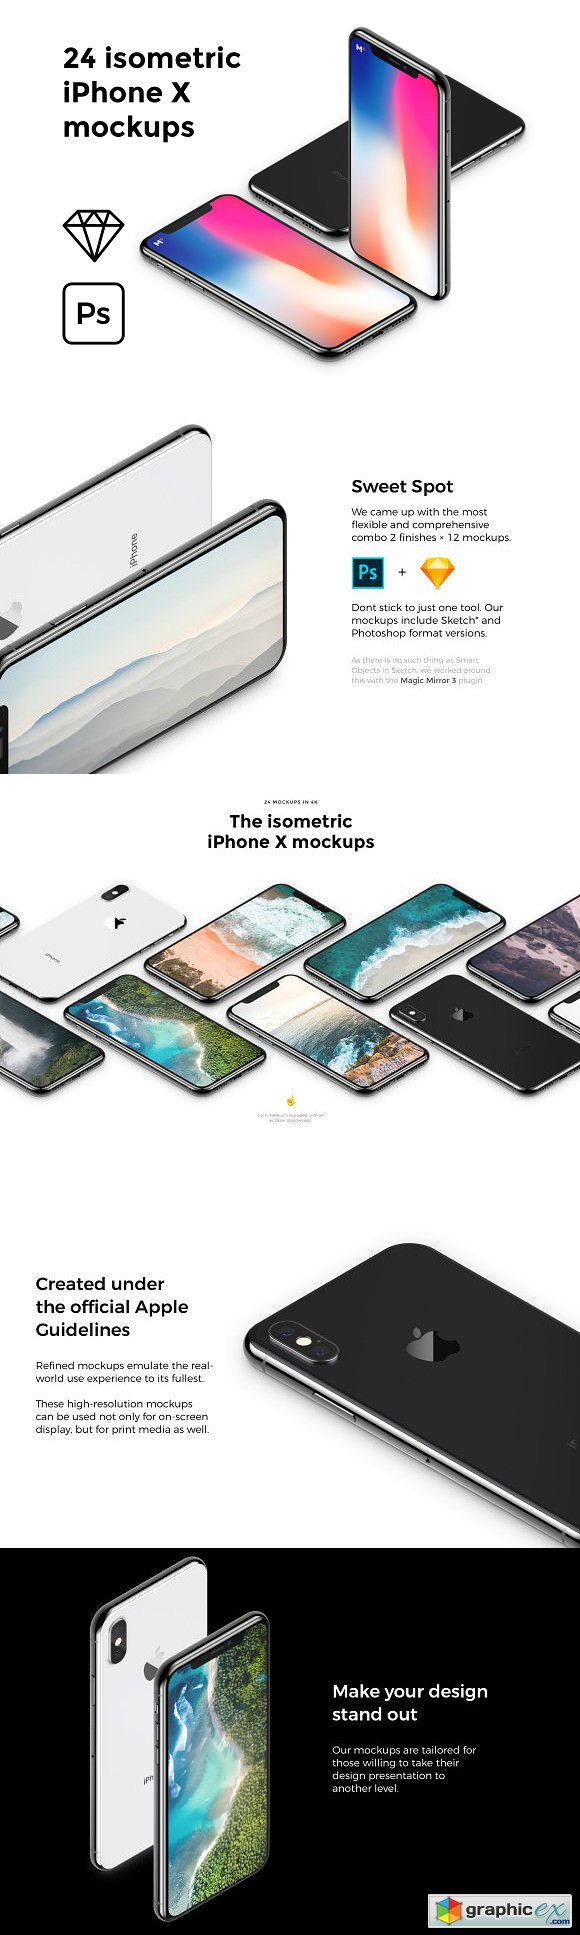 The Isometric iPhone X Mockups